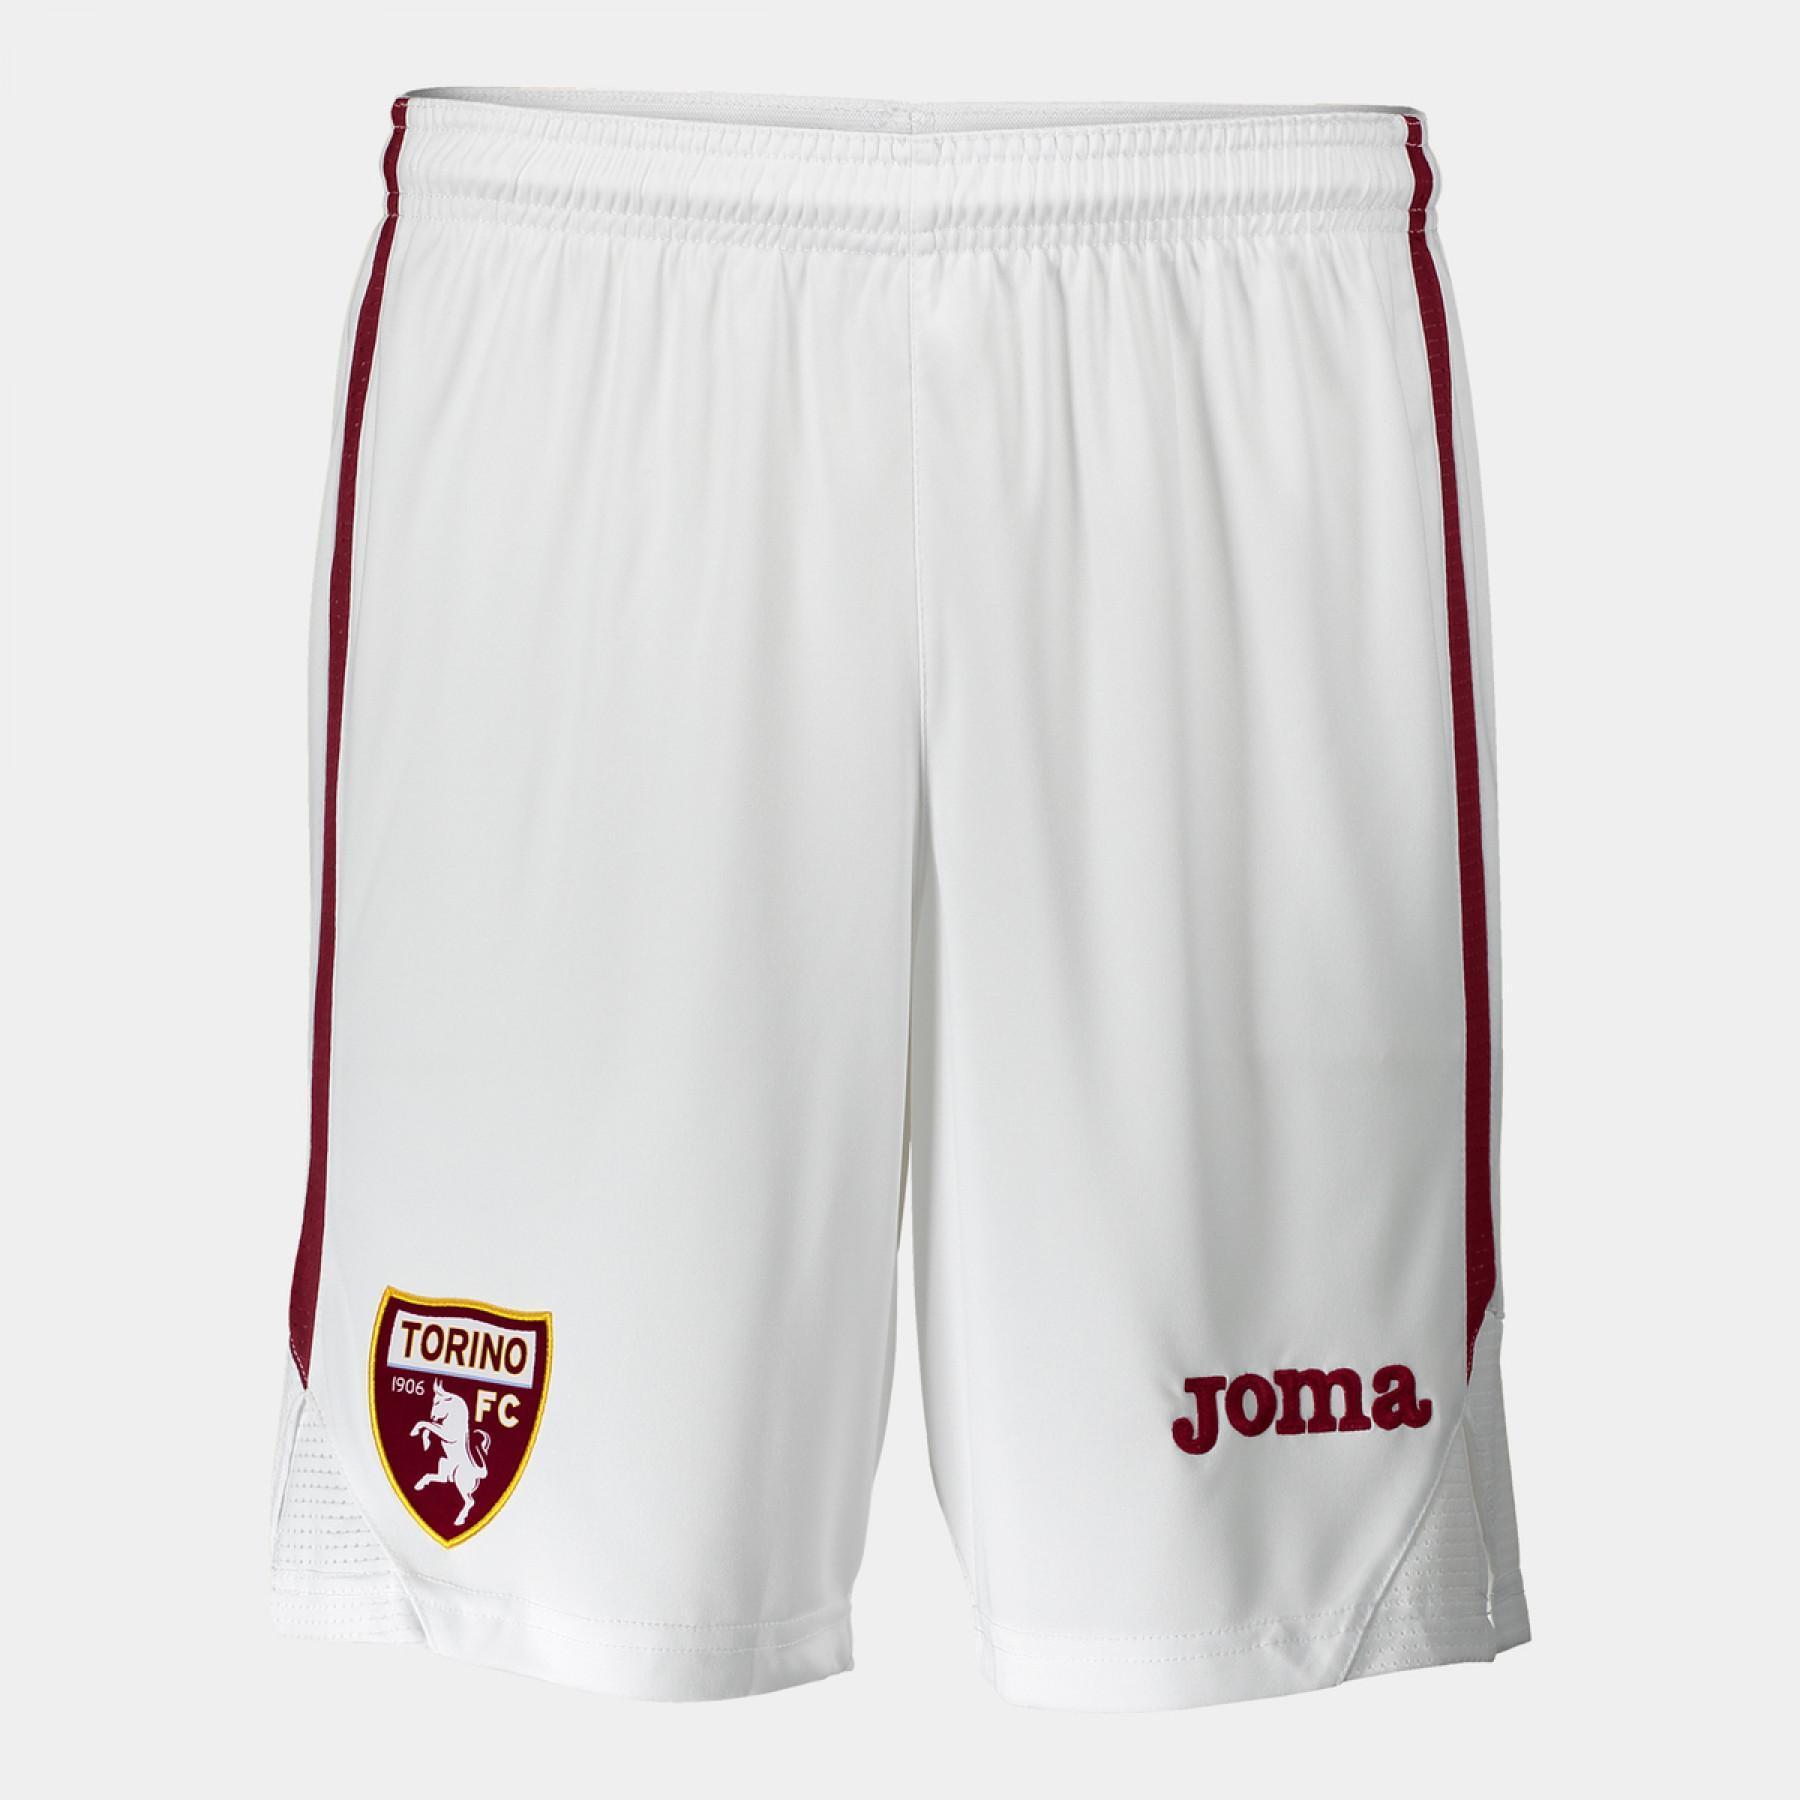 Children's outdoor shorts Torino FC 2020/21